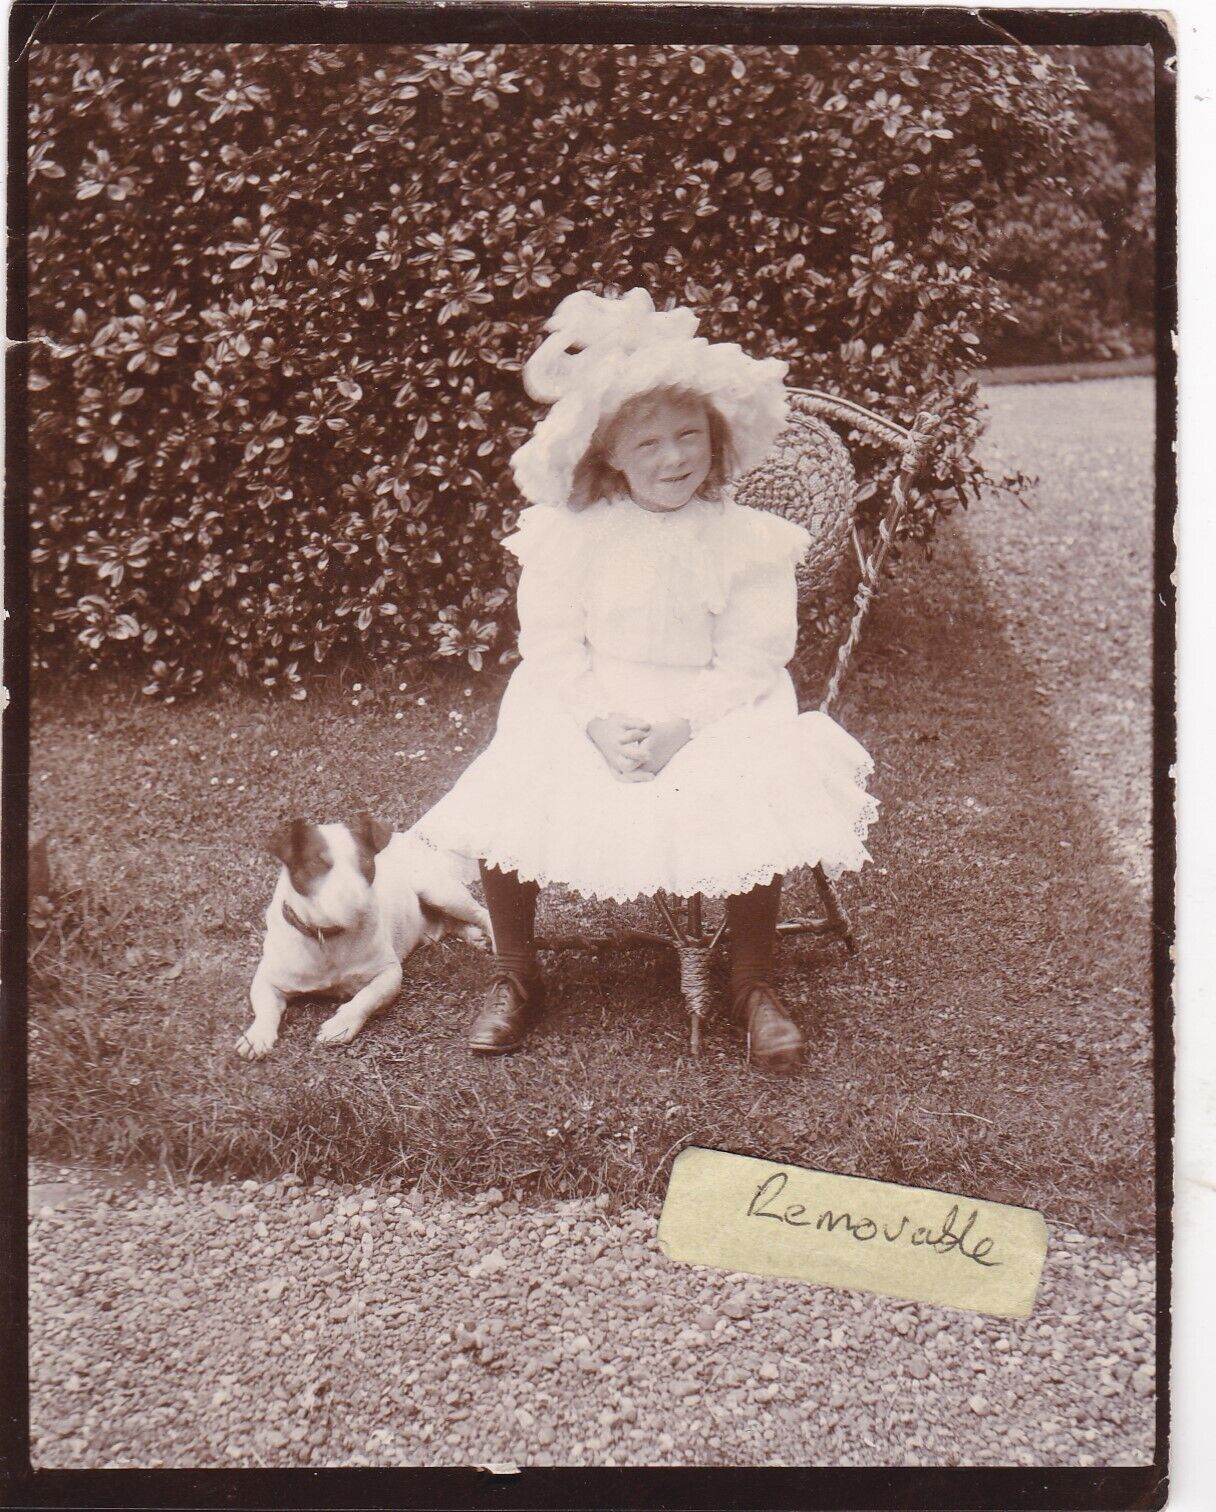 OLD PHOTO CHILDREN GIRL DRESS FASHION PET DOG ANIMAL SOCIAL HISTORY MR 166